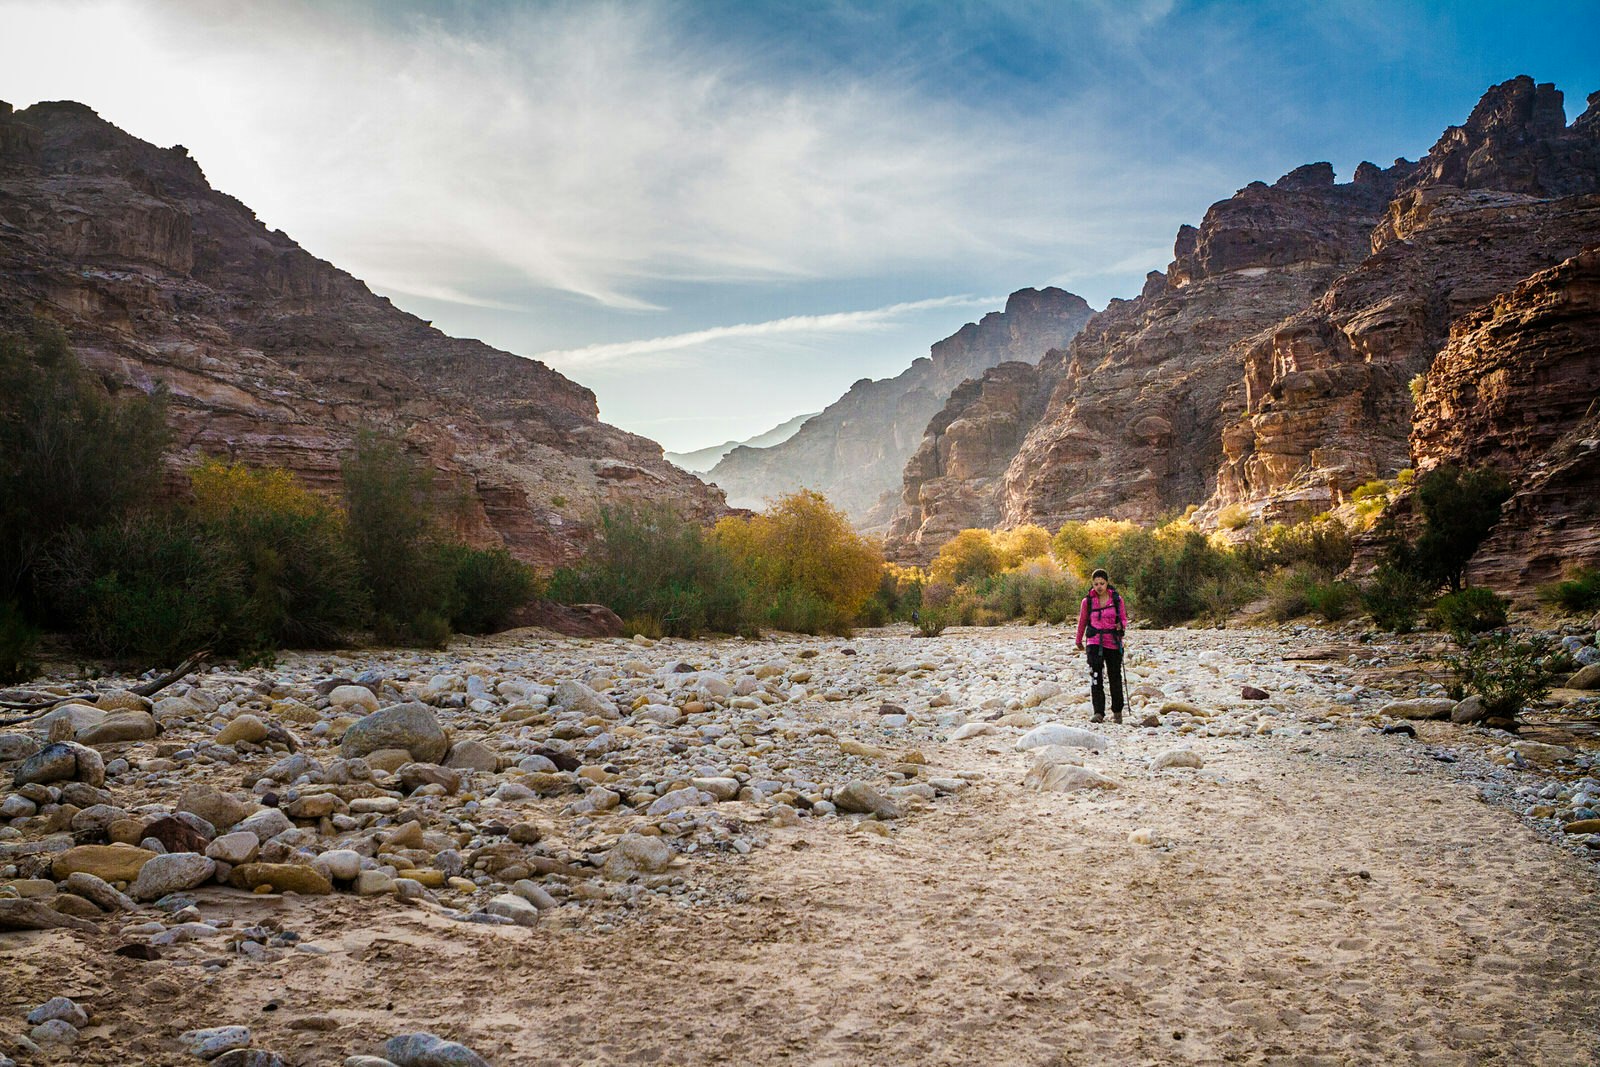 Jordan Trail hiking from Gaa Mriebed to Wadi Gseib. Image by Ali Barqawi Studios